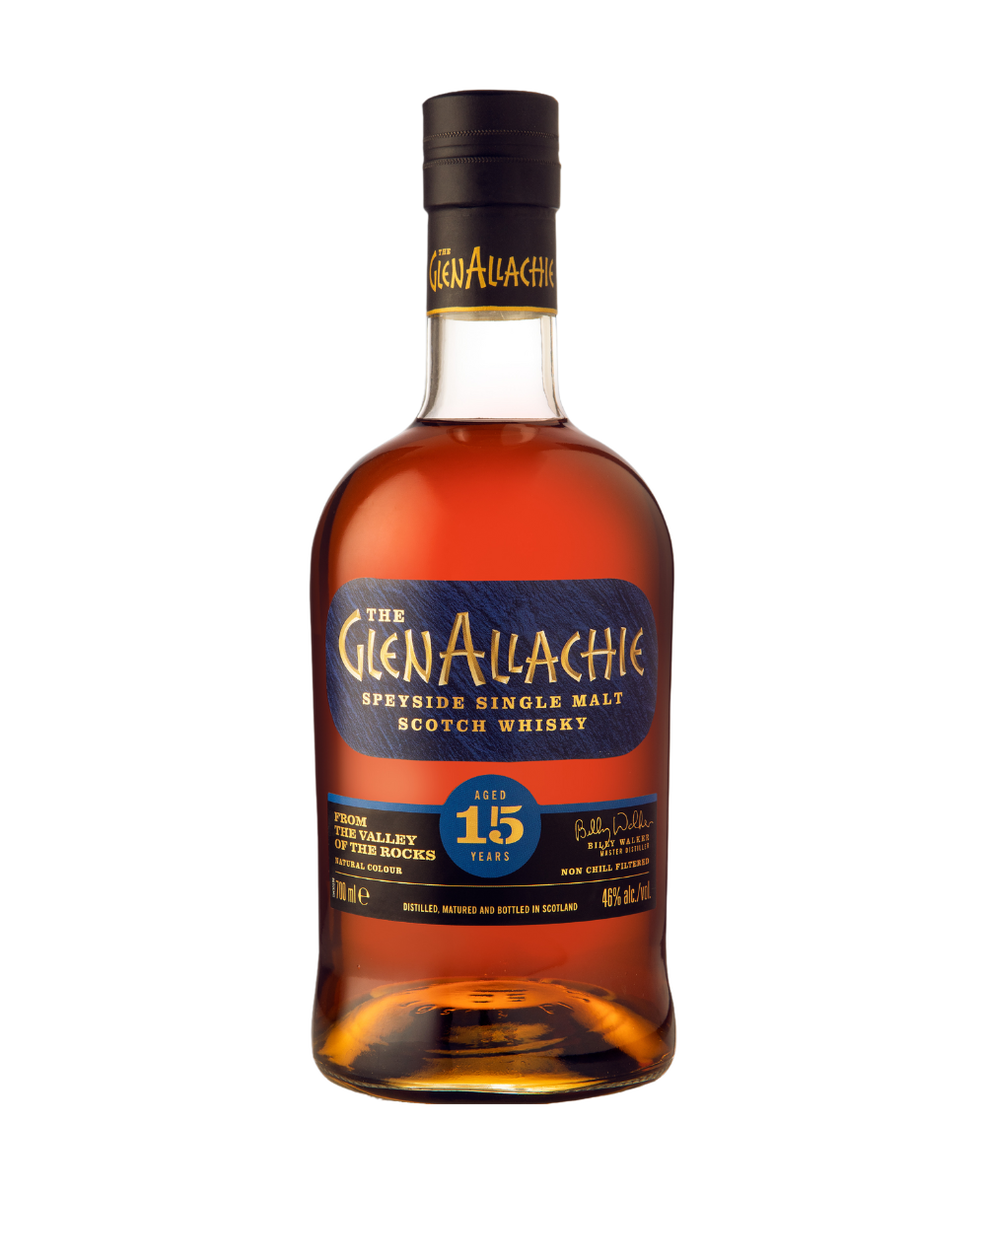 The GlenAllachie 15 Year Single Malt Scotch Whisky